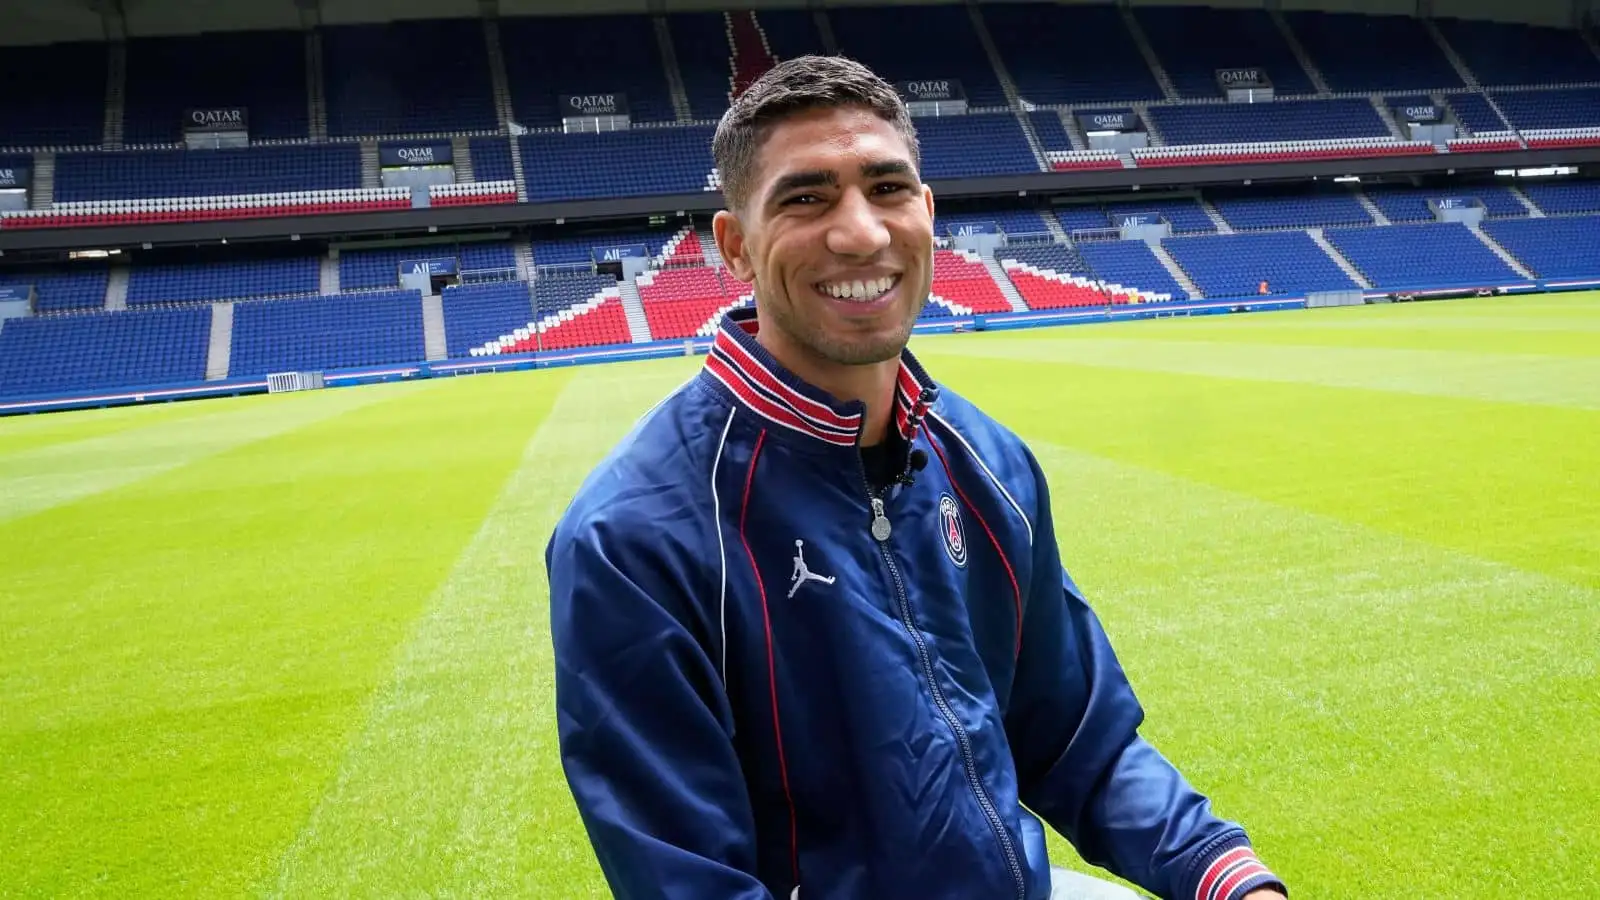 Achraf Hakimi of Paris Saint-Germain smiles during an interview at the Parc des Princes stadium